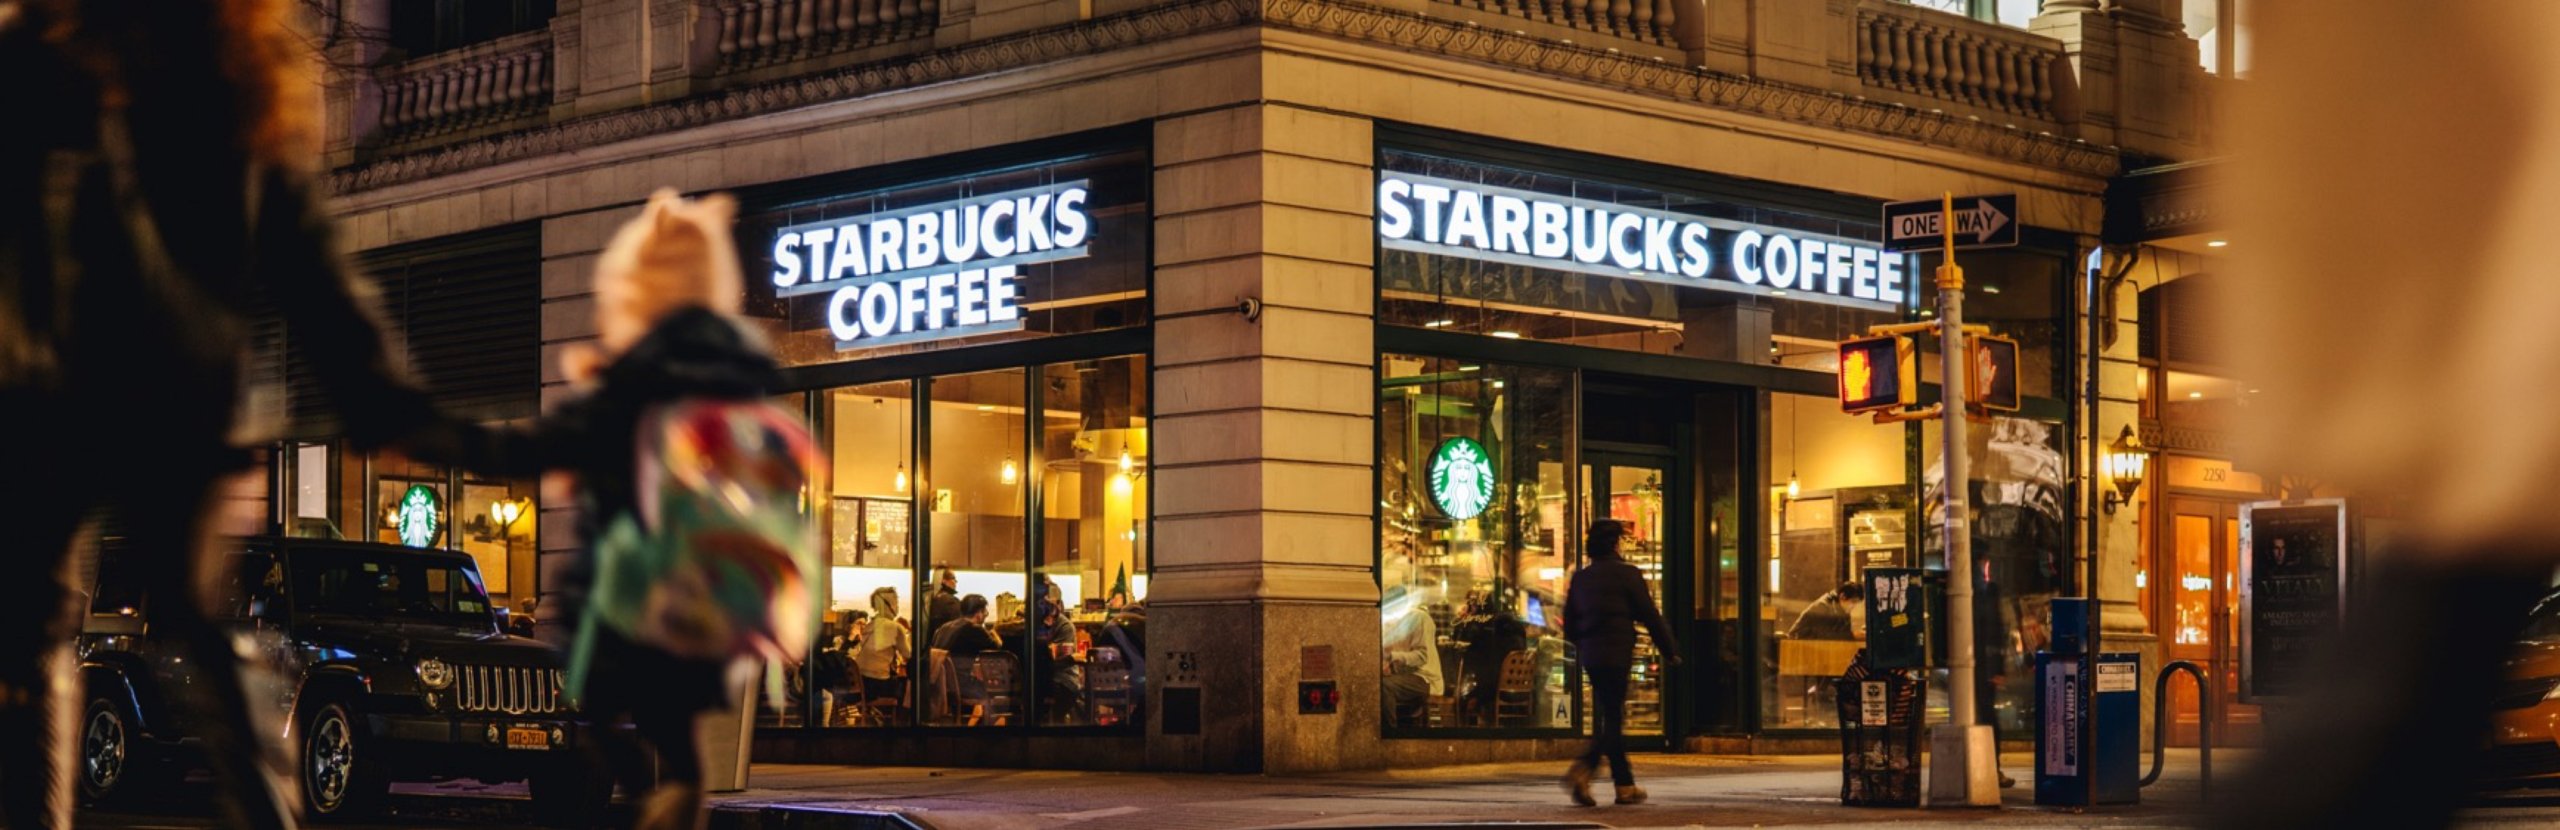 A Starbucks location shown at night.